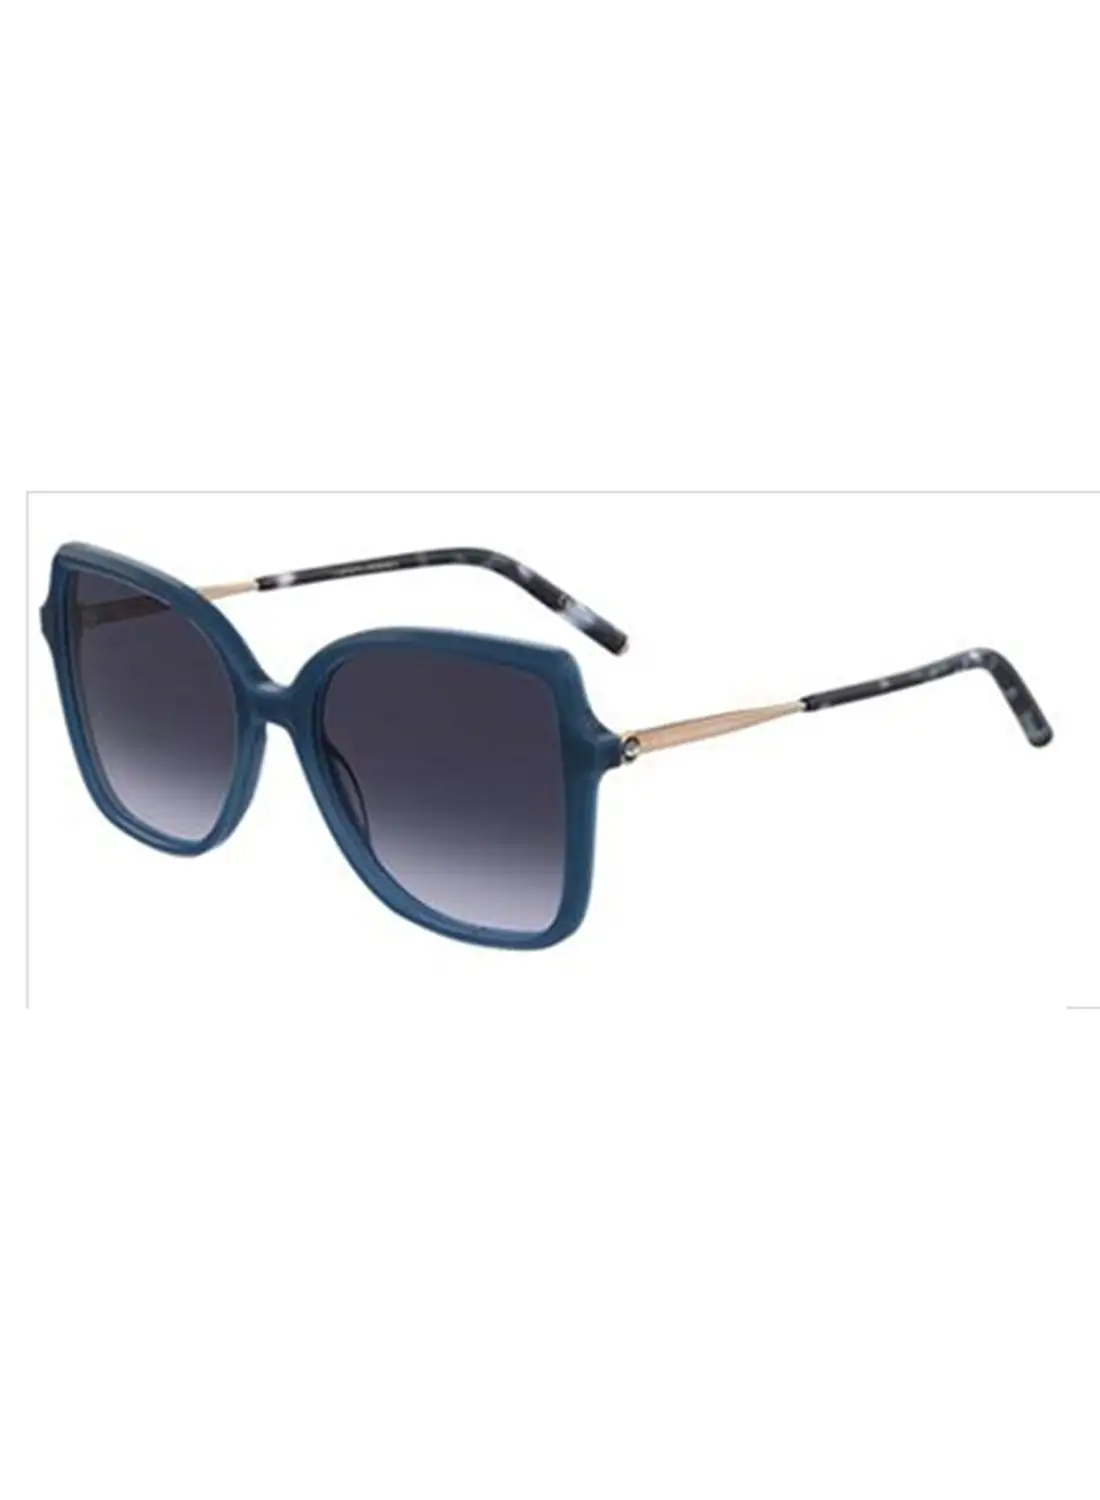 CAROLINA HERRERA Women's UV Protection Square Sunglasses - Her 0179/S Blue 17 - Lens Size: 51.3 Mm